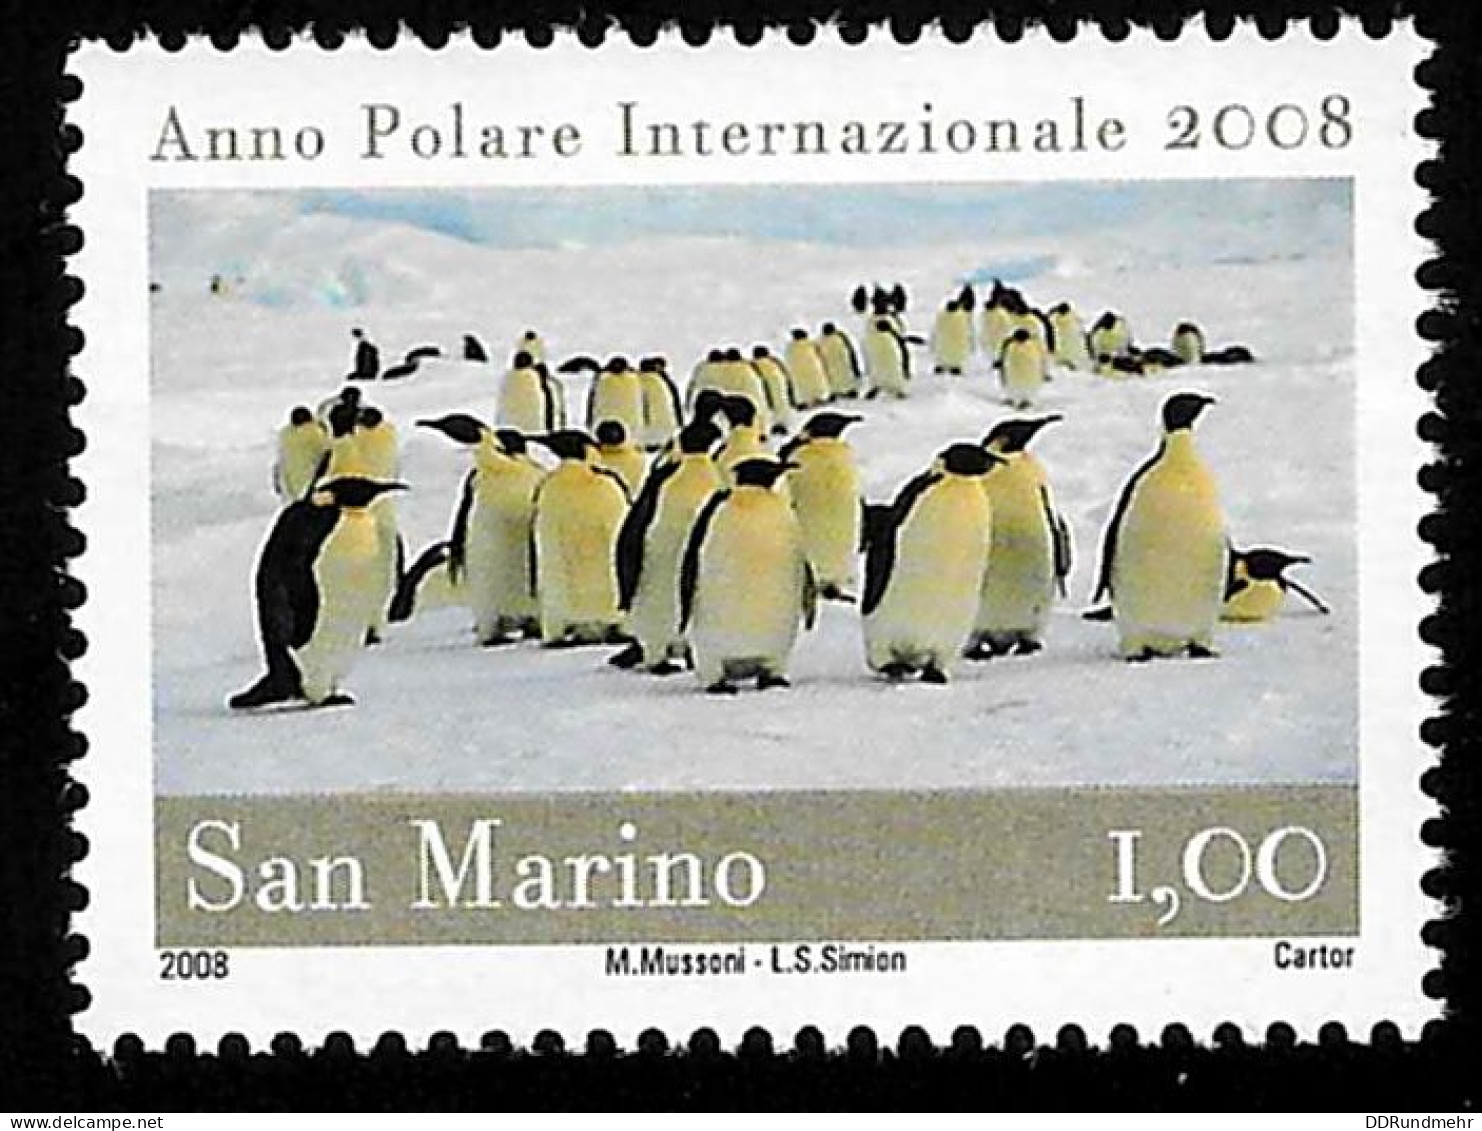 2008 Polar Year Michel SM 2359 Stamp Number SM 1769 Yvert Et Tellier SM 2152 Stanley Gibbons SM 2185 Xx MNH - Unused Stamps